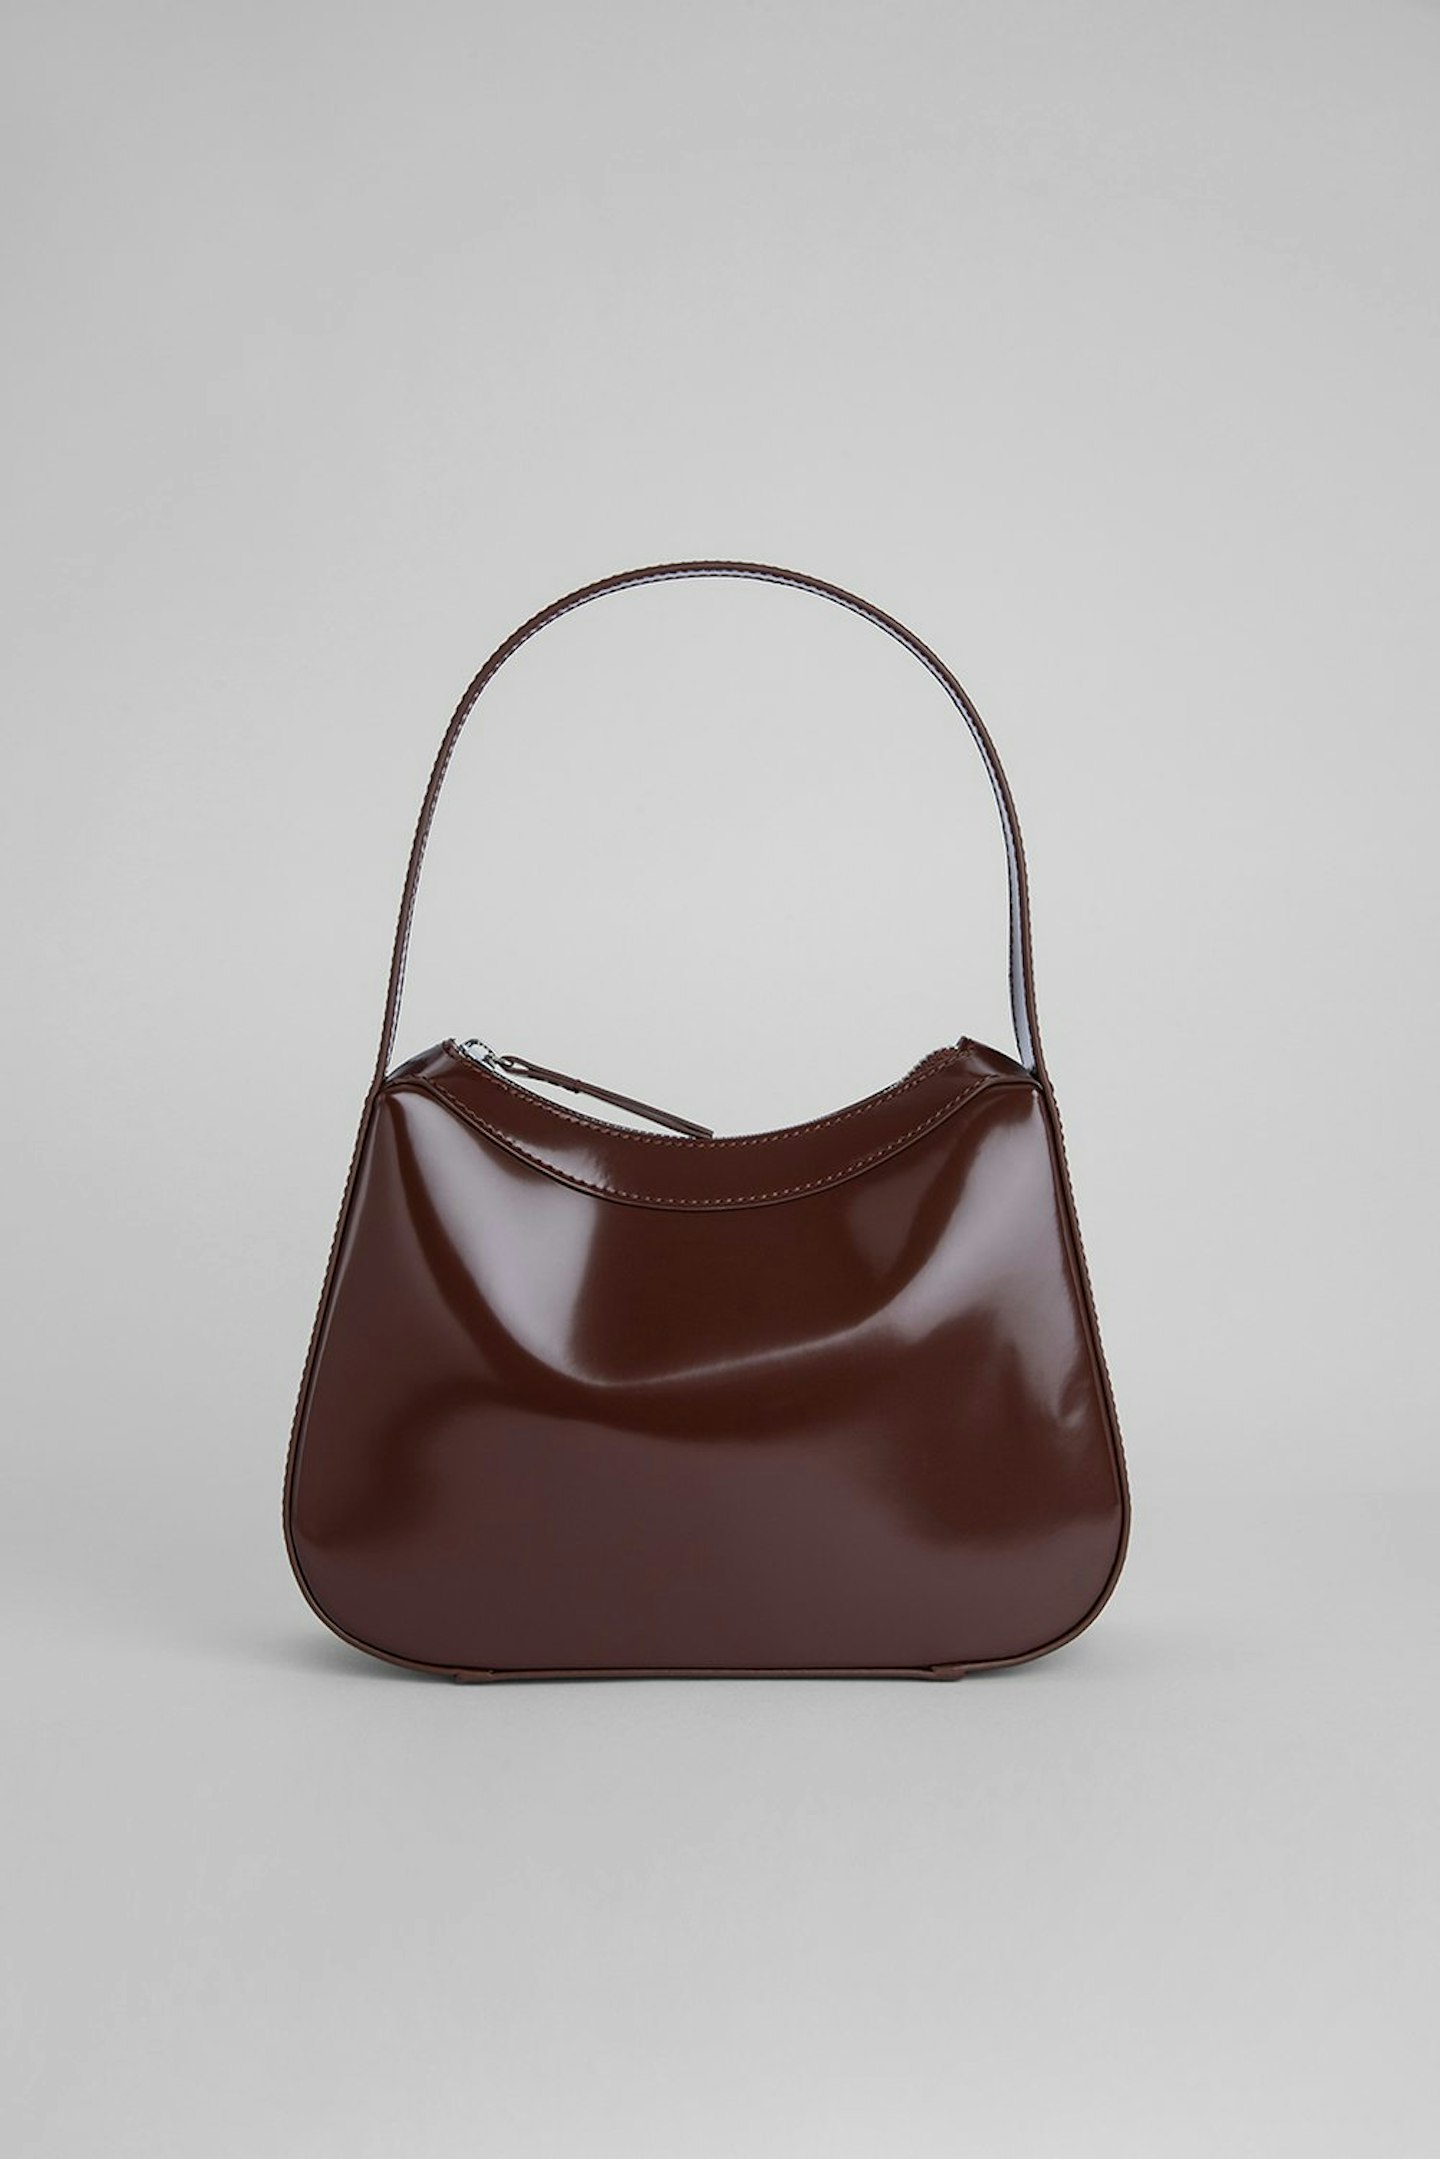 By Far, Kiki Dark Brown Semi-Patent Leather, £500